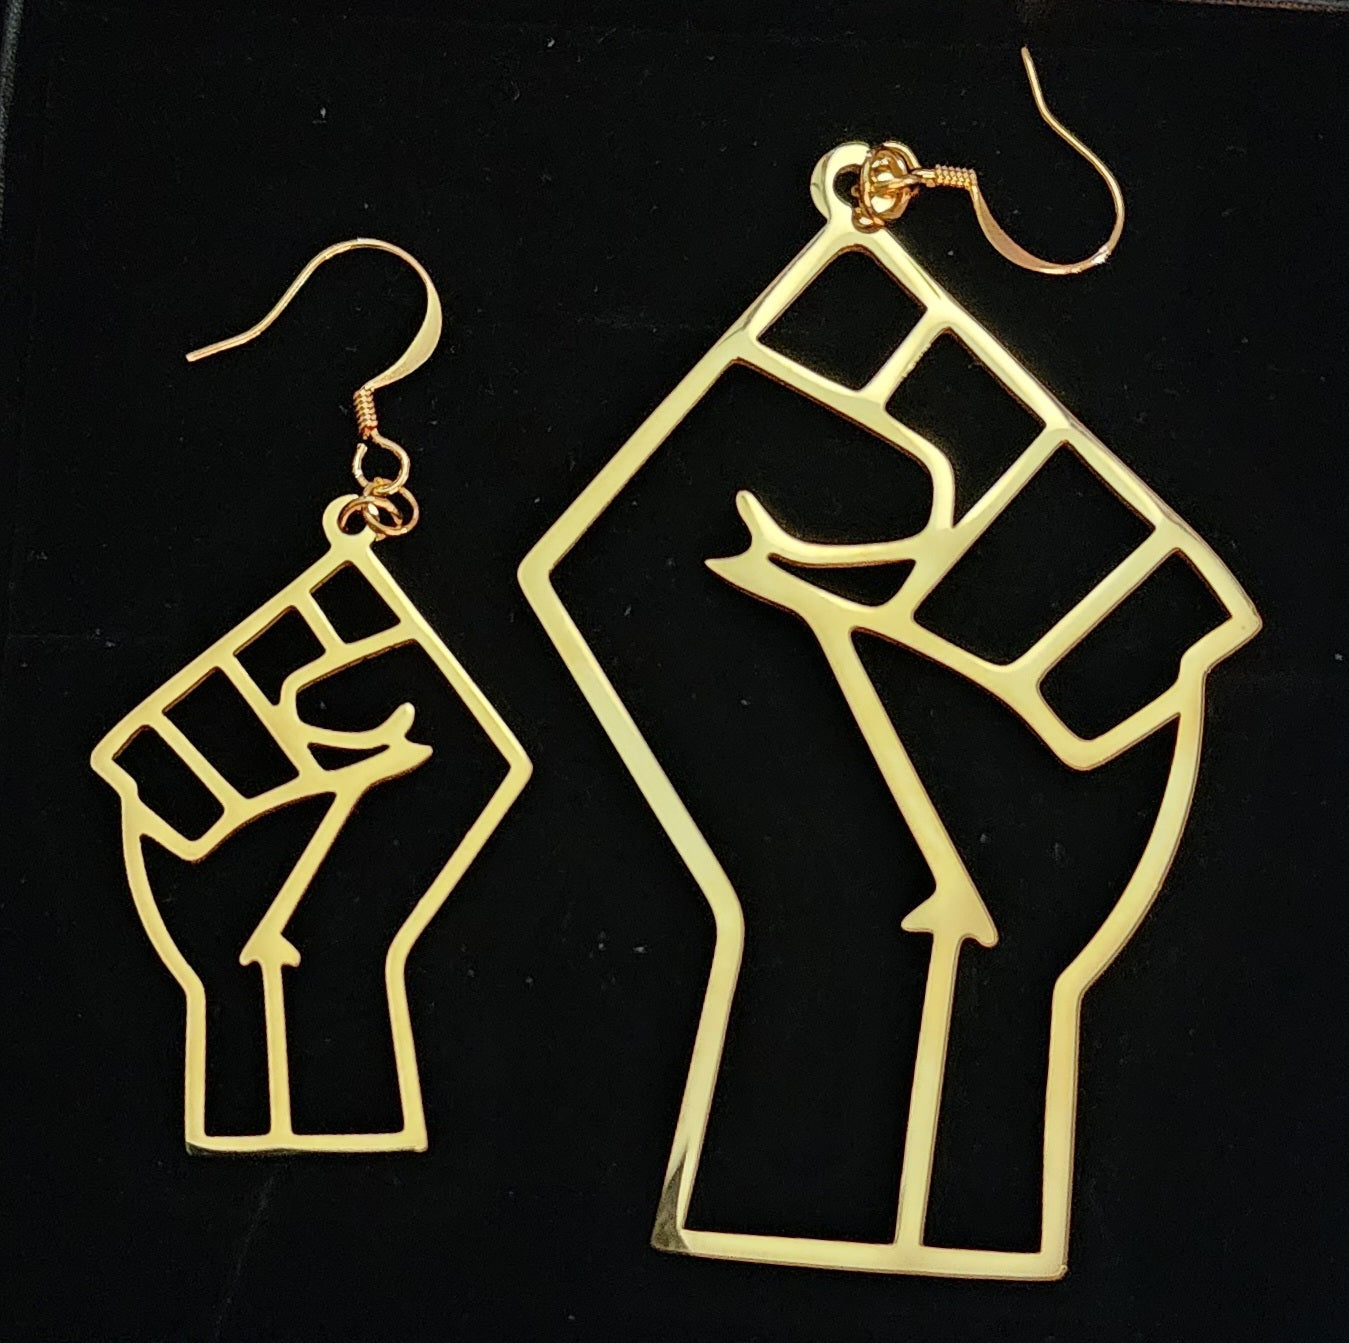 14k Gold plated Fist Earrings